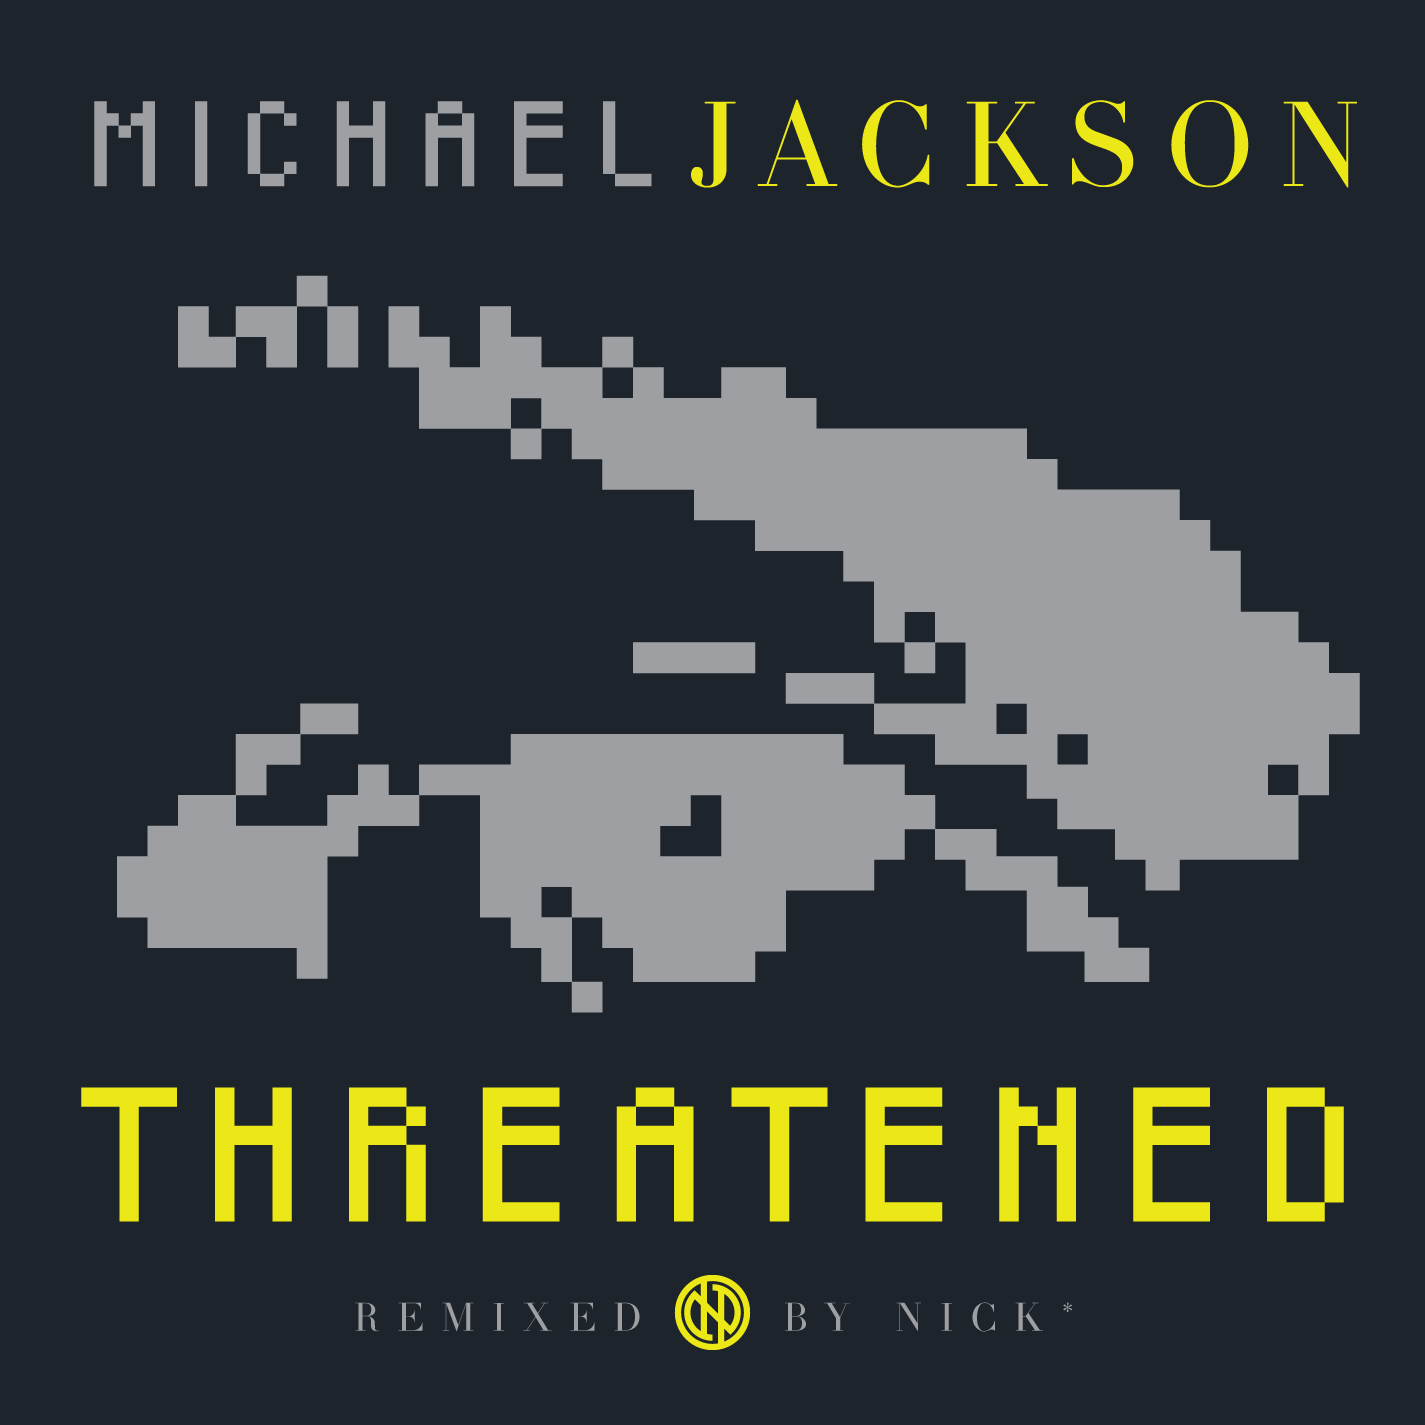 Michael Jackson - Threatened Nick* Remix